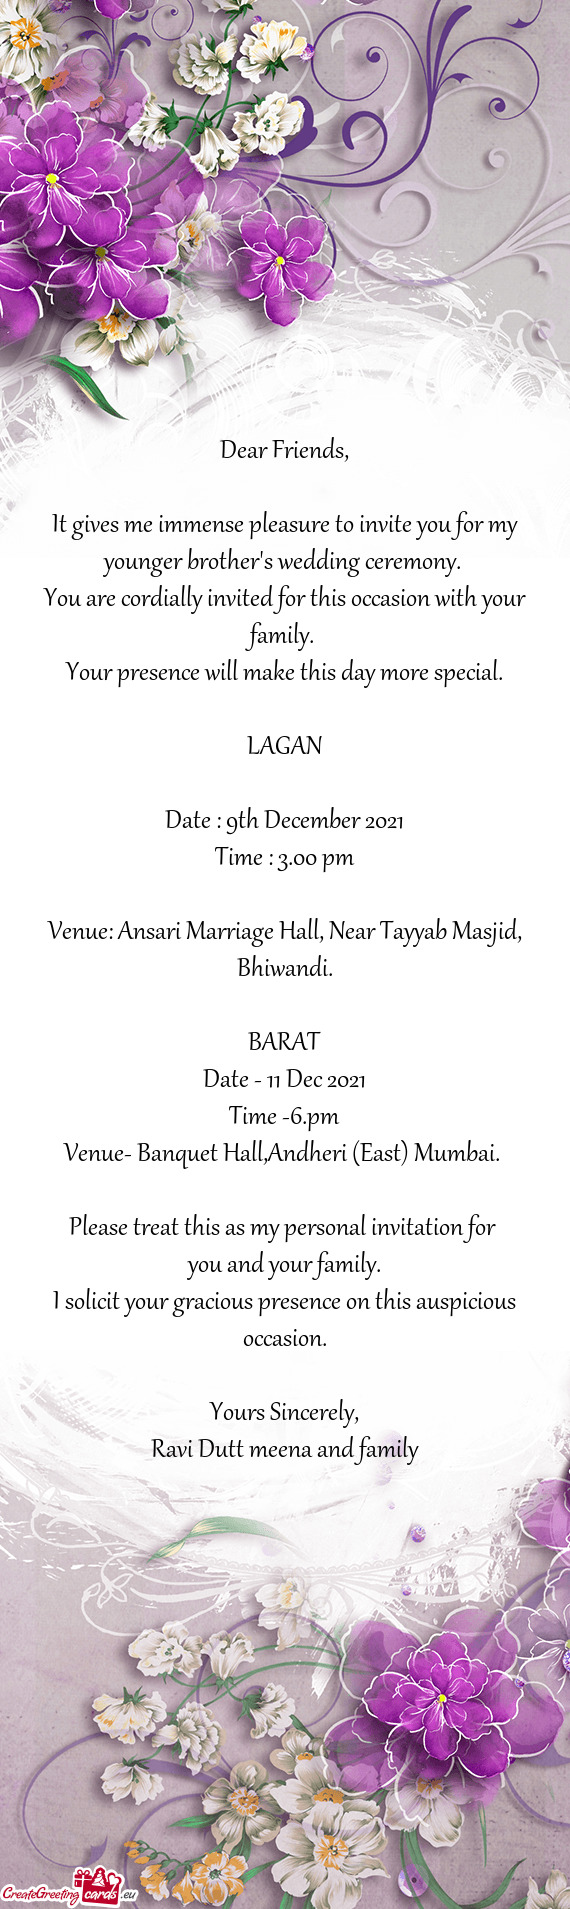 Venue: Ansari Marriage Hall, Near Tayyab Masjid, Bhiwandi